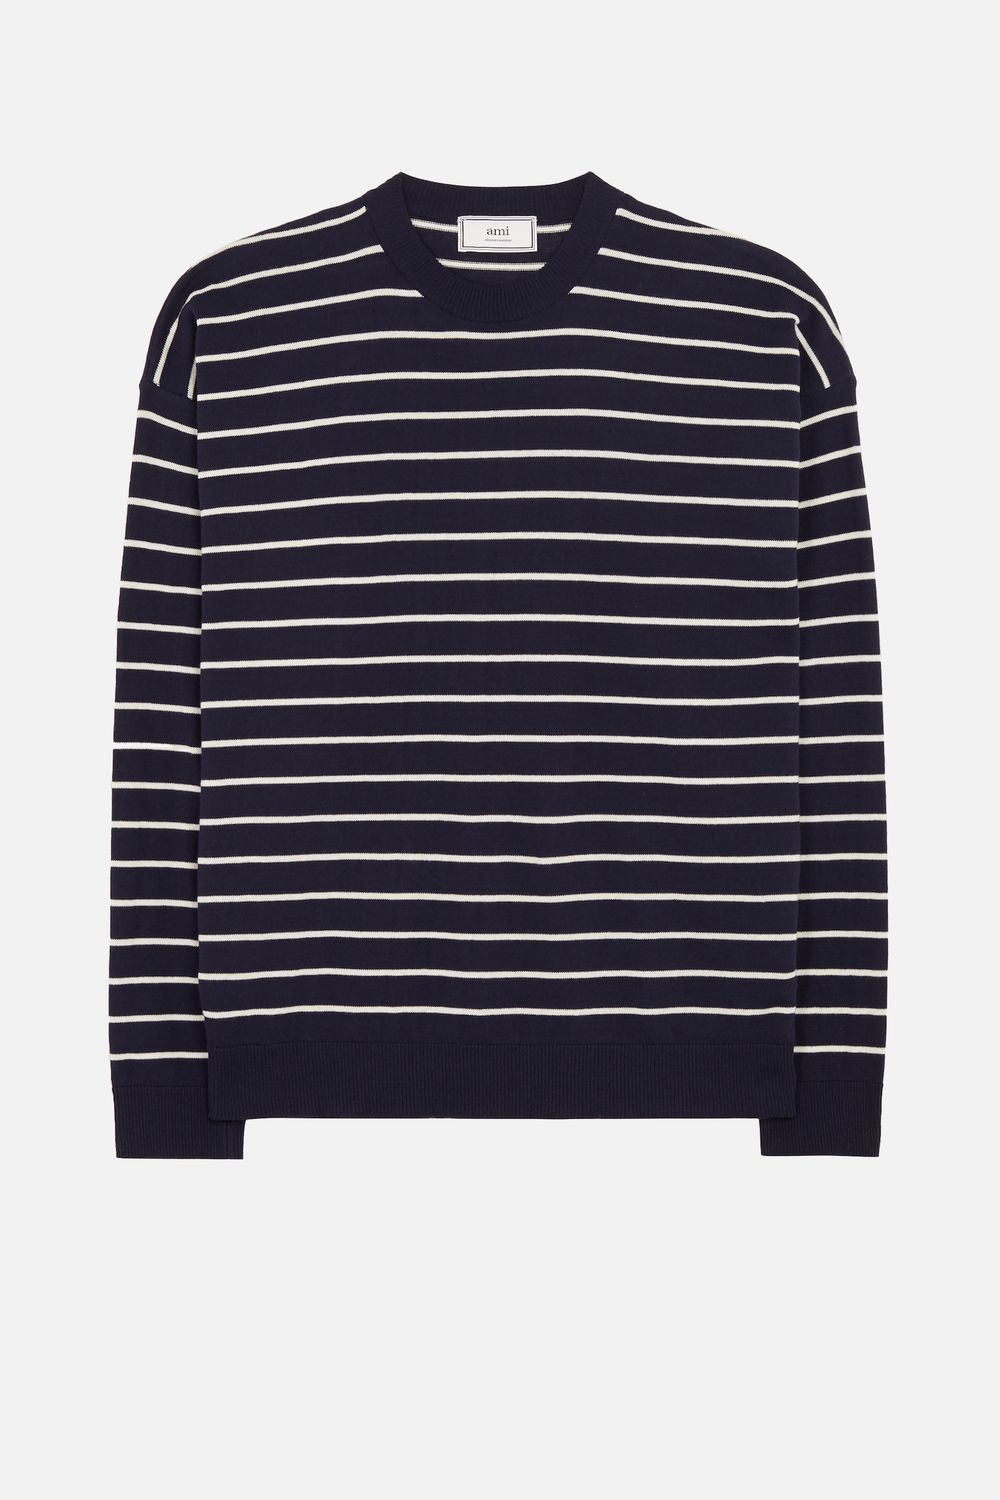 crew neck striped sweater - AMI PARIS OFFICIAL